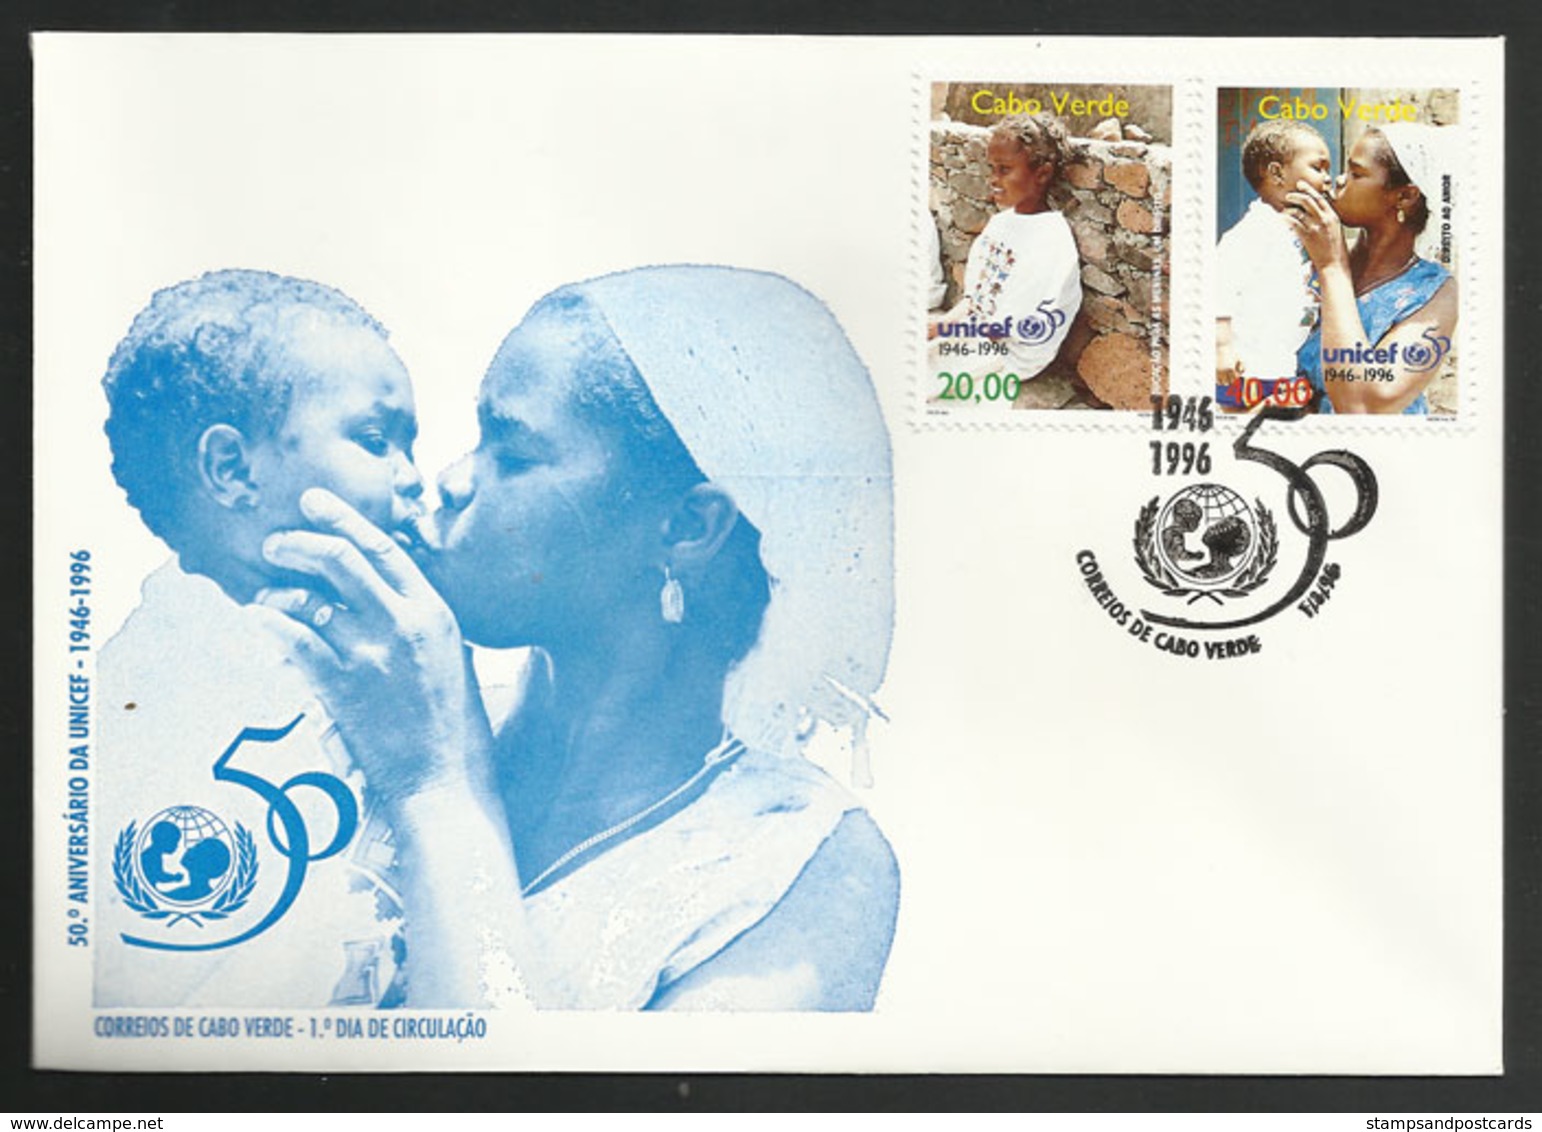 Cabo Verde Cap Vert UNICEF 50 Ans FDC 1996 Cape Verde 50 Years UNICEF FDC - Cape Verde